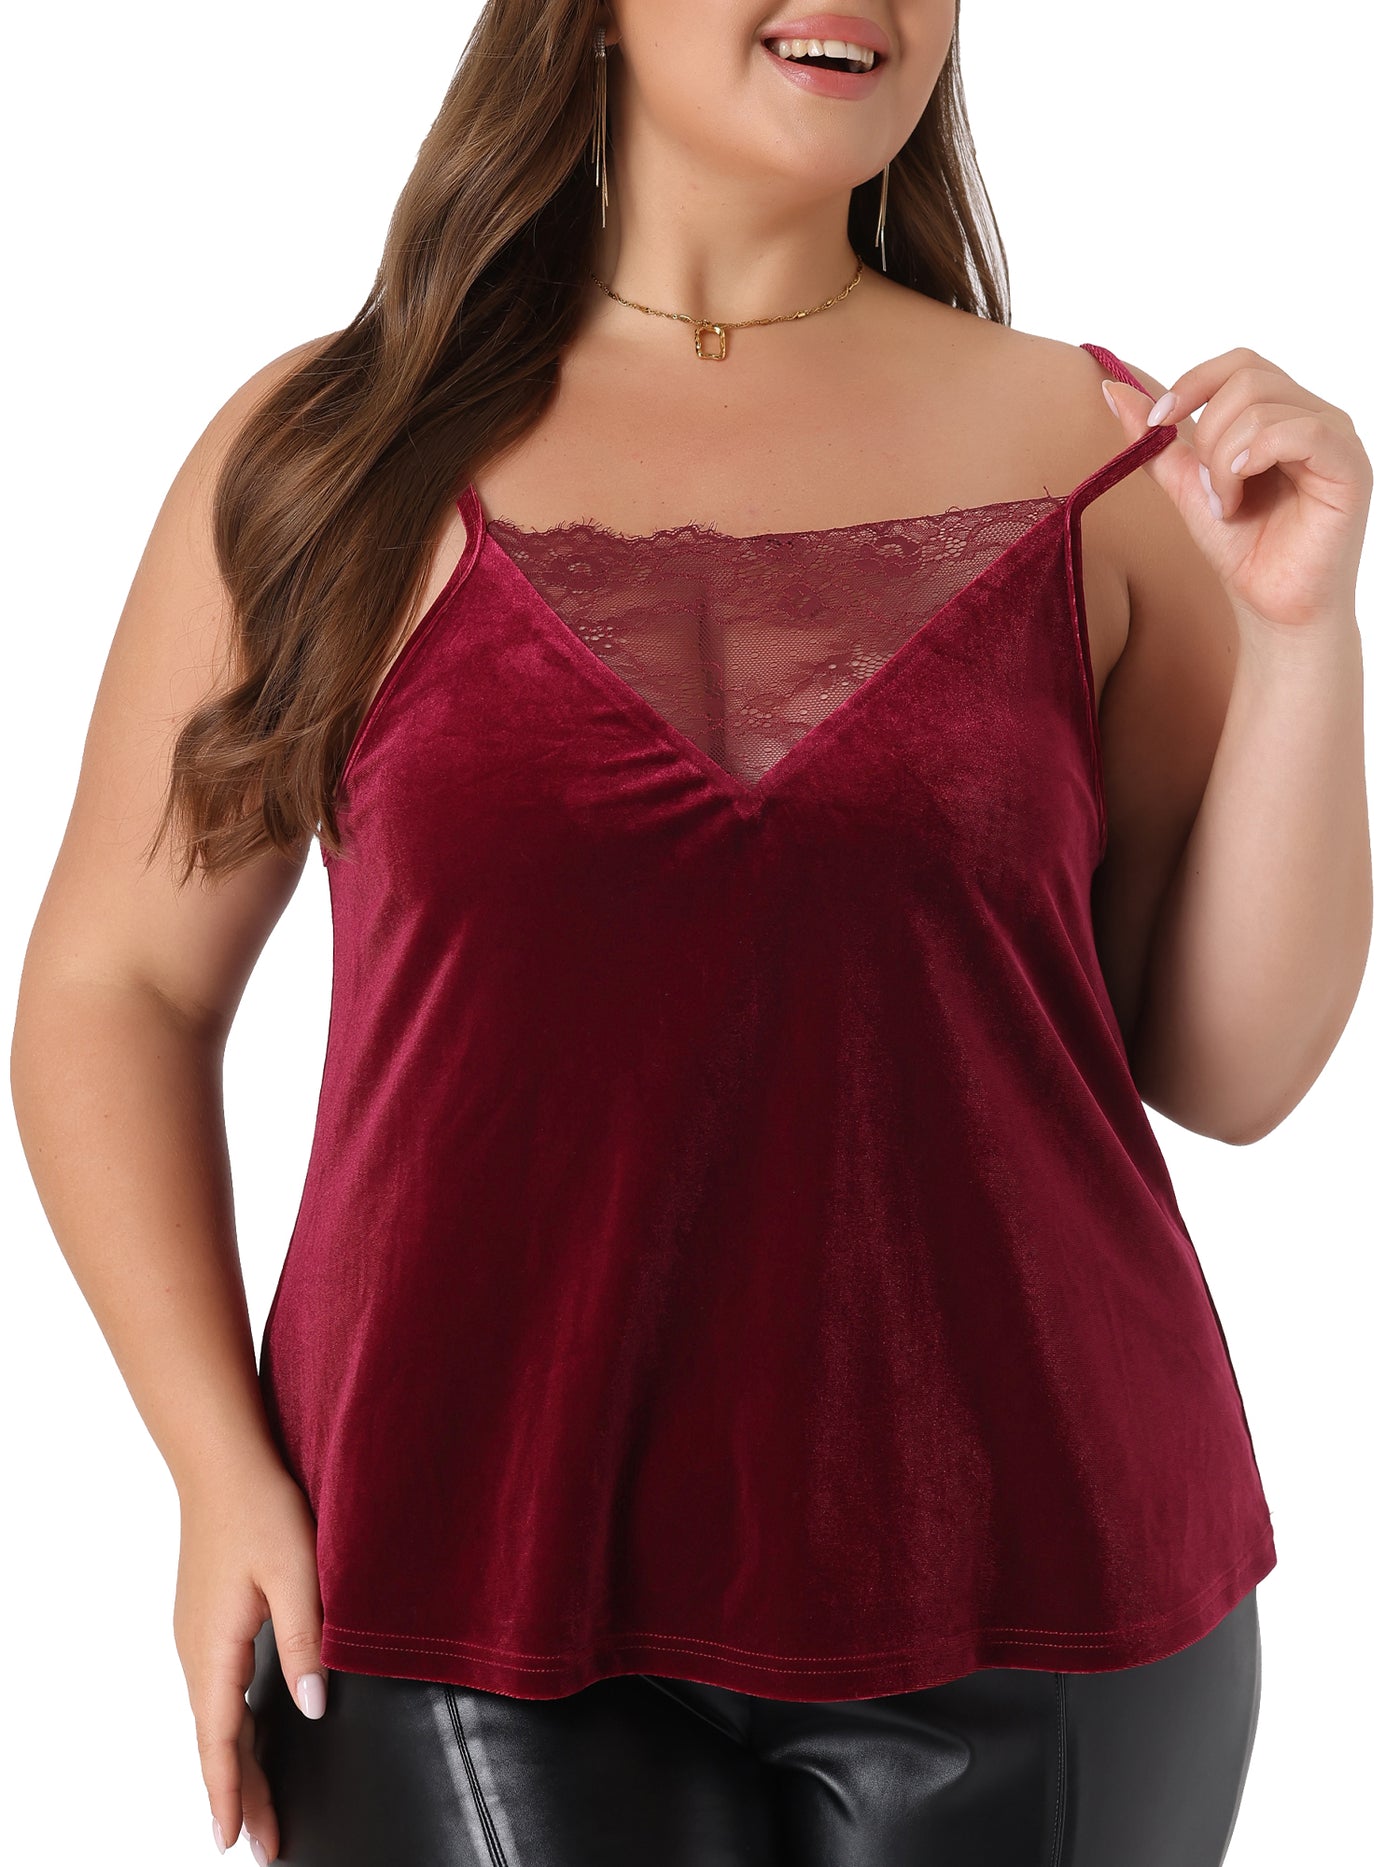 Bublédon Velvet Camisole for Women Plus Size Adjustable Strap Lace Sleeveless Cami Tank Tops